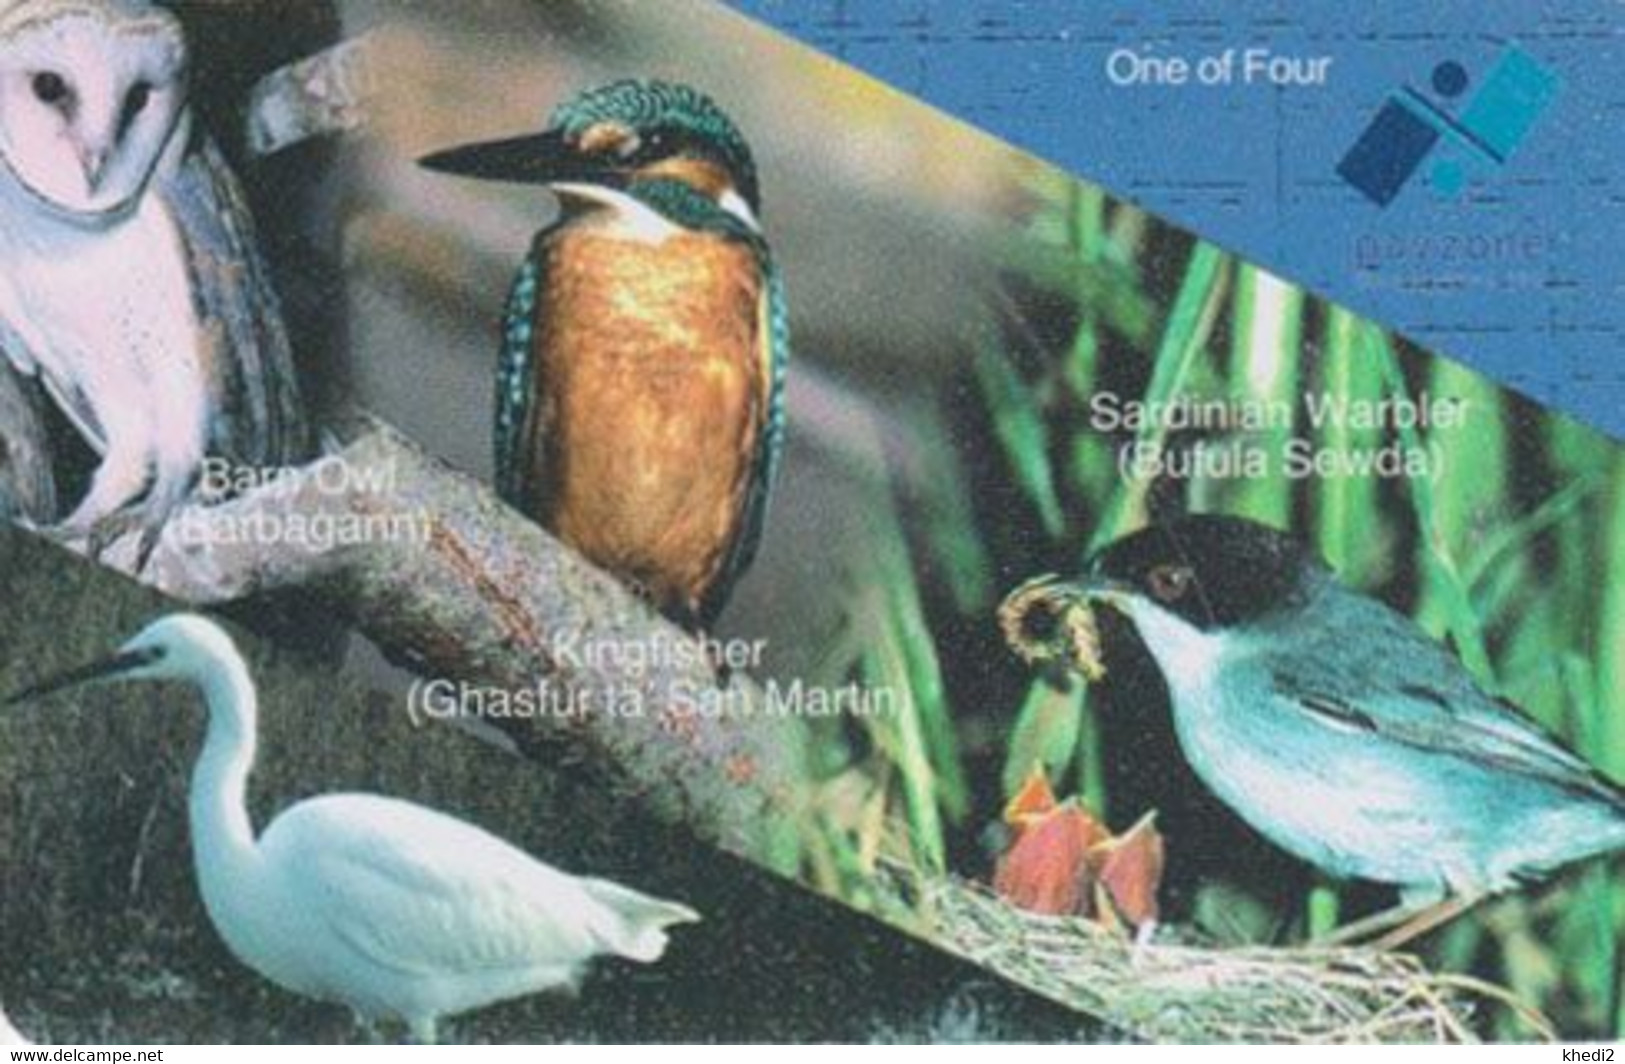 TC Puce MALTE - ANIMAL - Vautour Hibou Martin Pêcheur - Owl Vulture Kingfisher - Raptor Bird Chip Phonecard - Eagle 66 - Malte